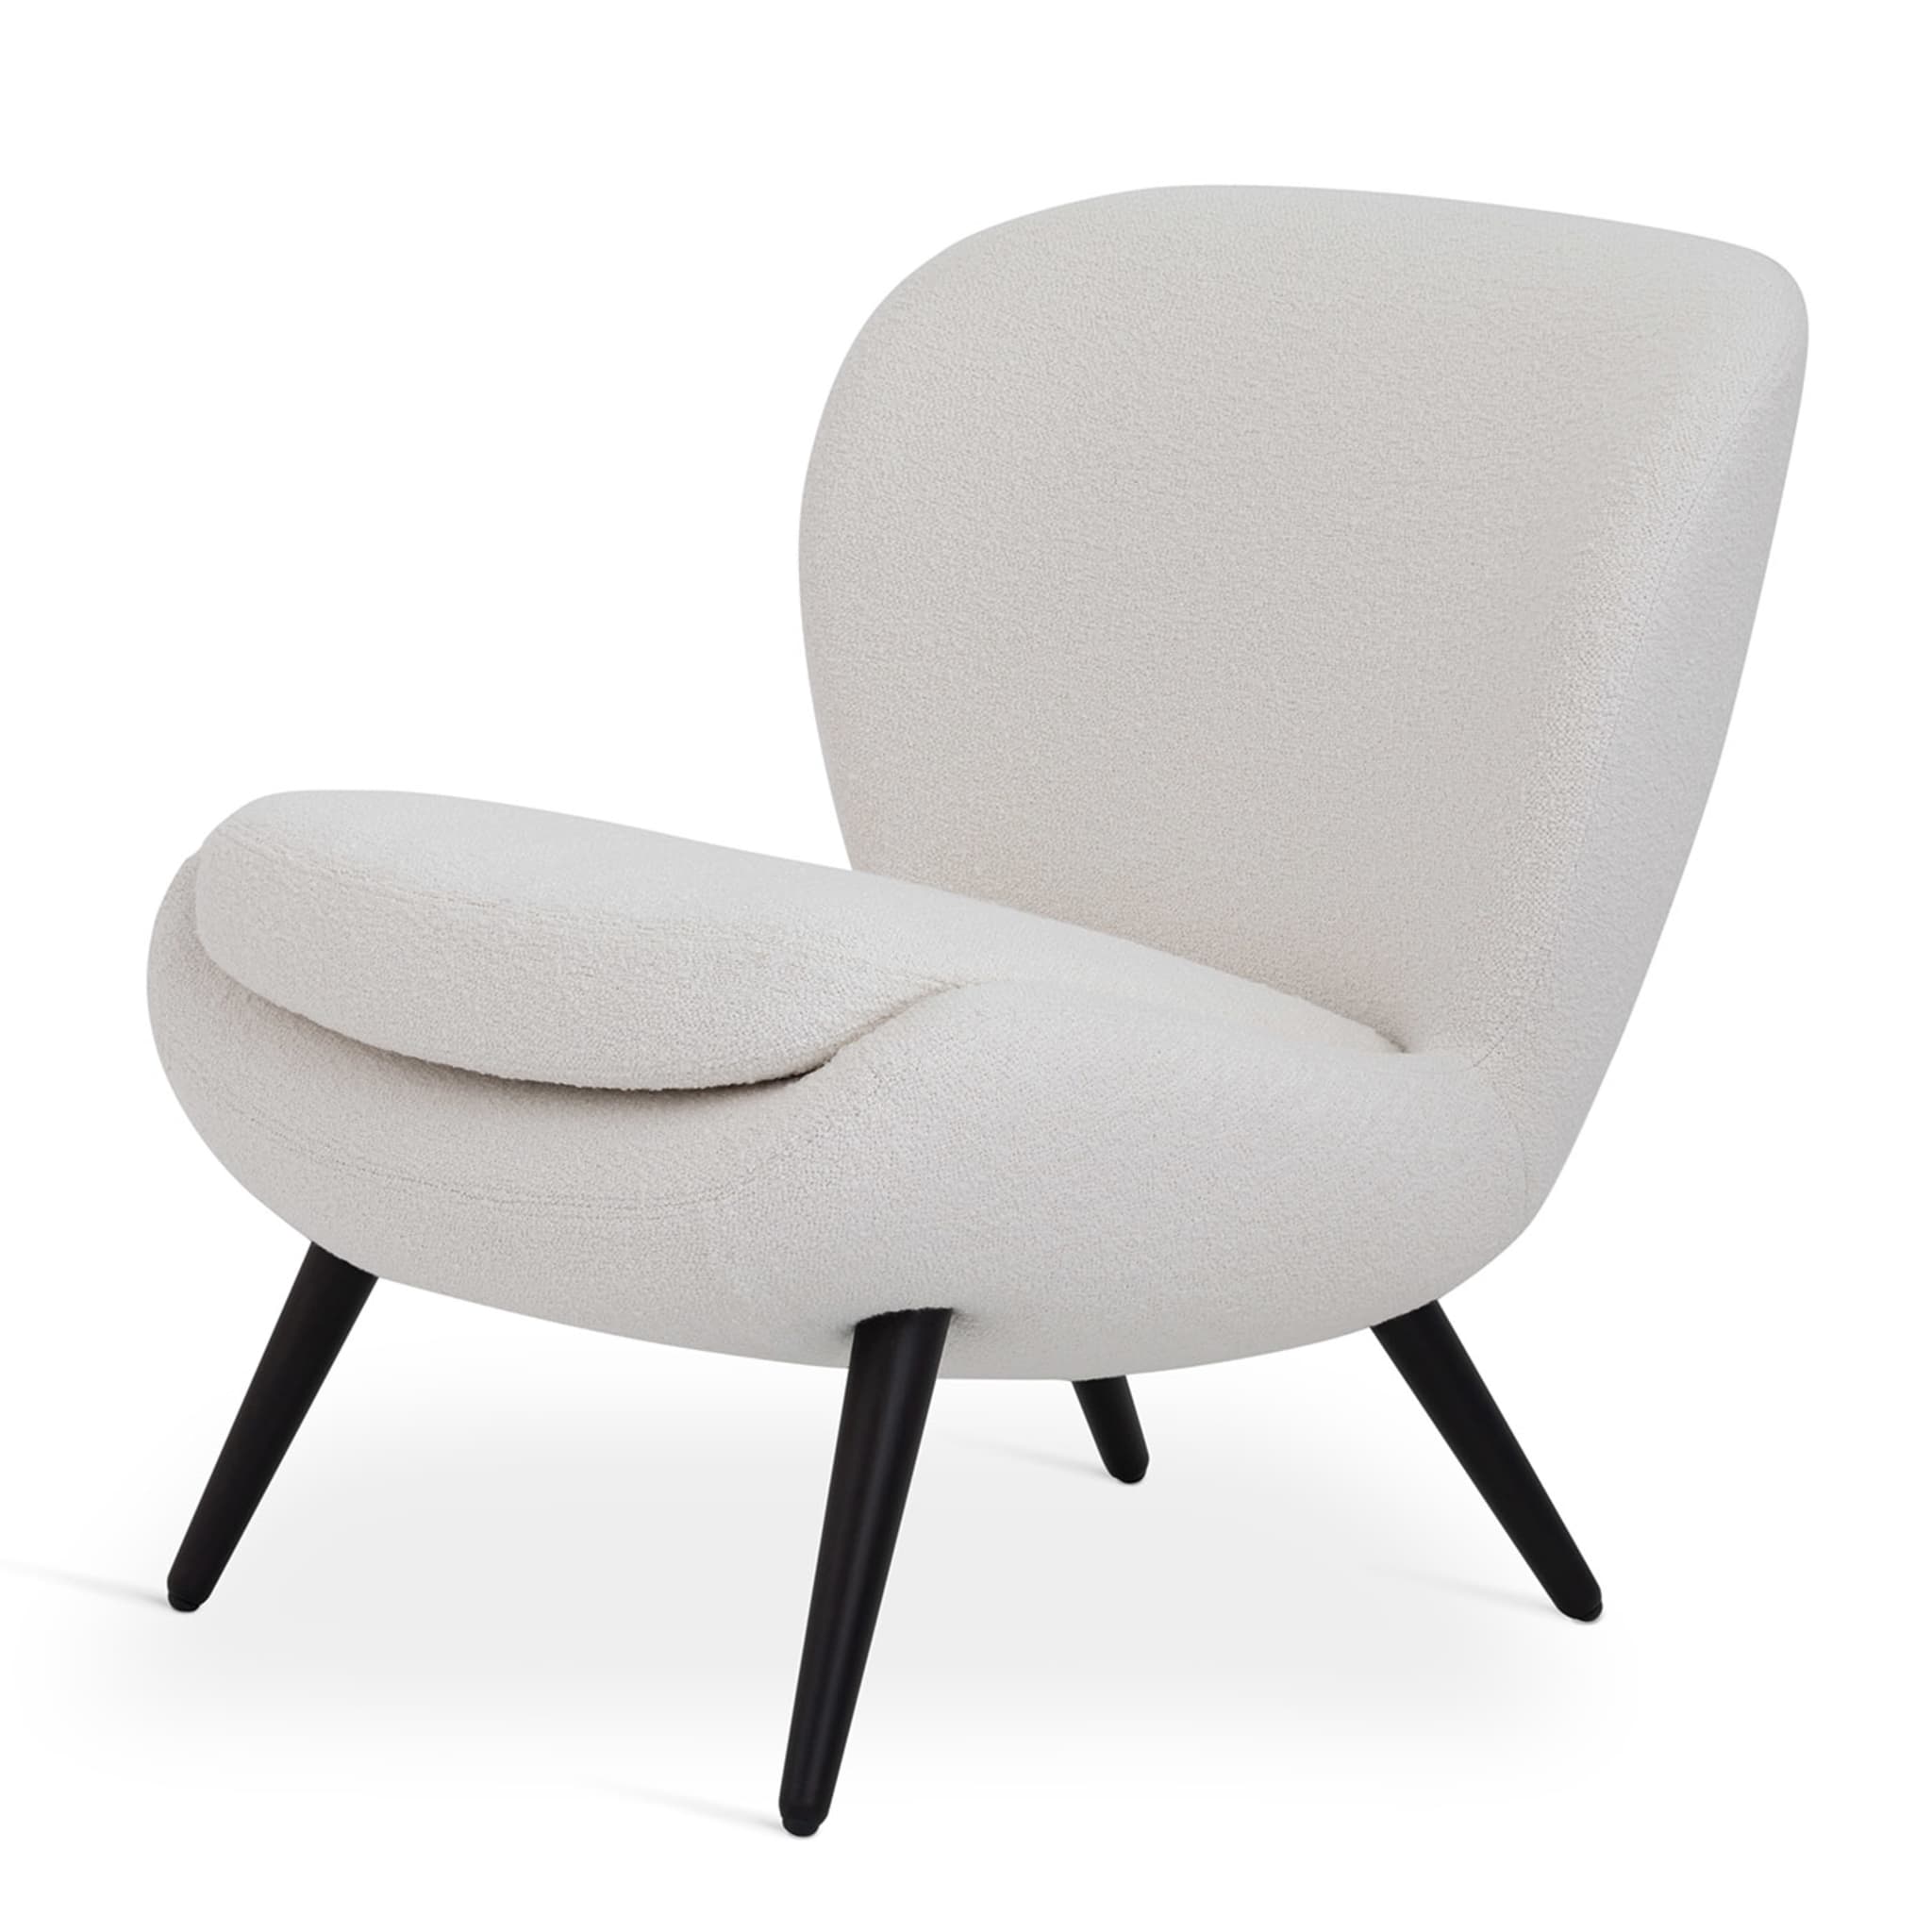 Niels White Lounge Chair - Alternative view 2